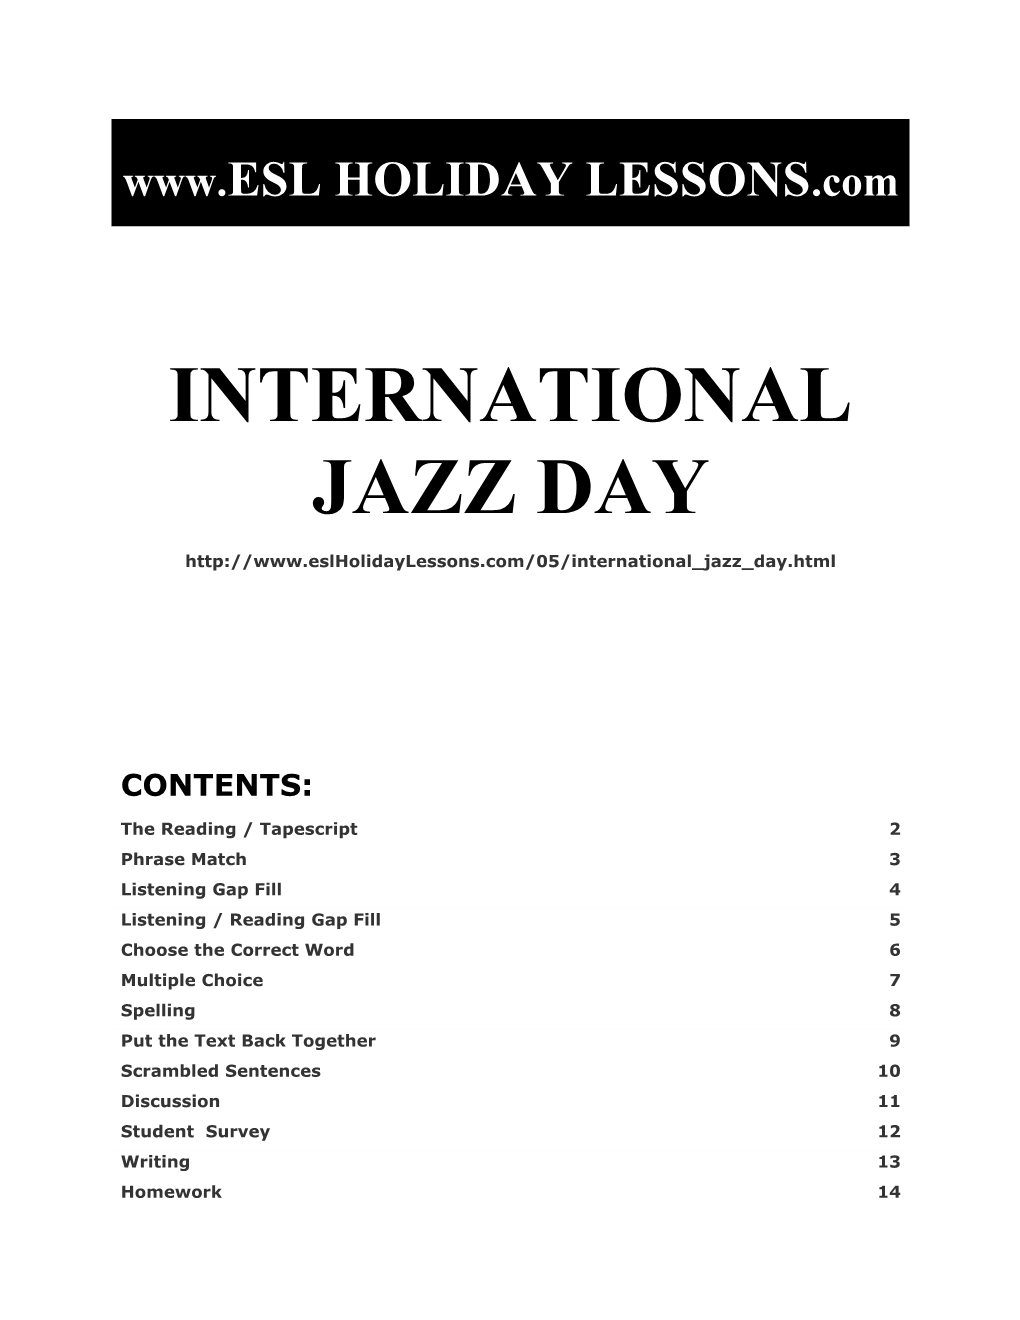 Holiday Lessons - International Jazz Day